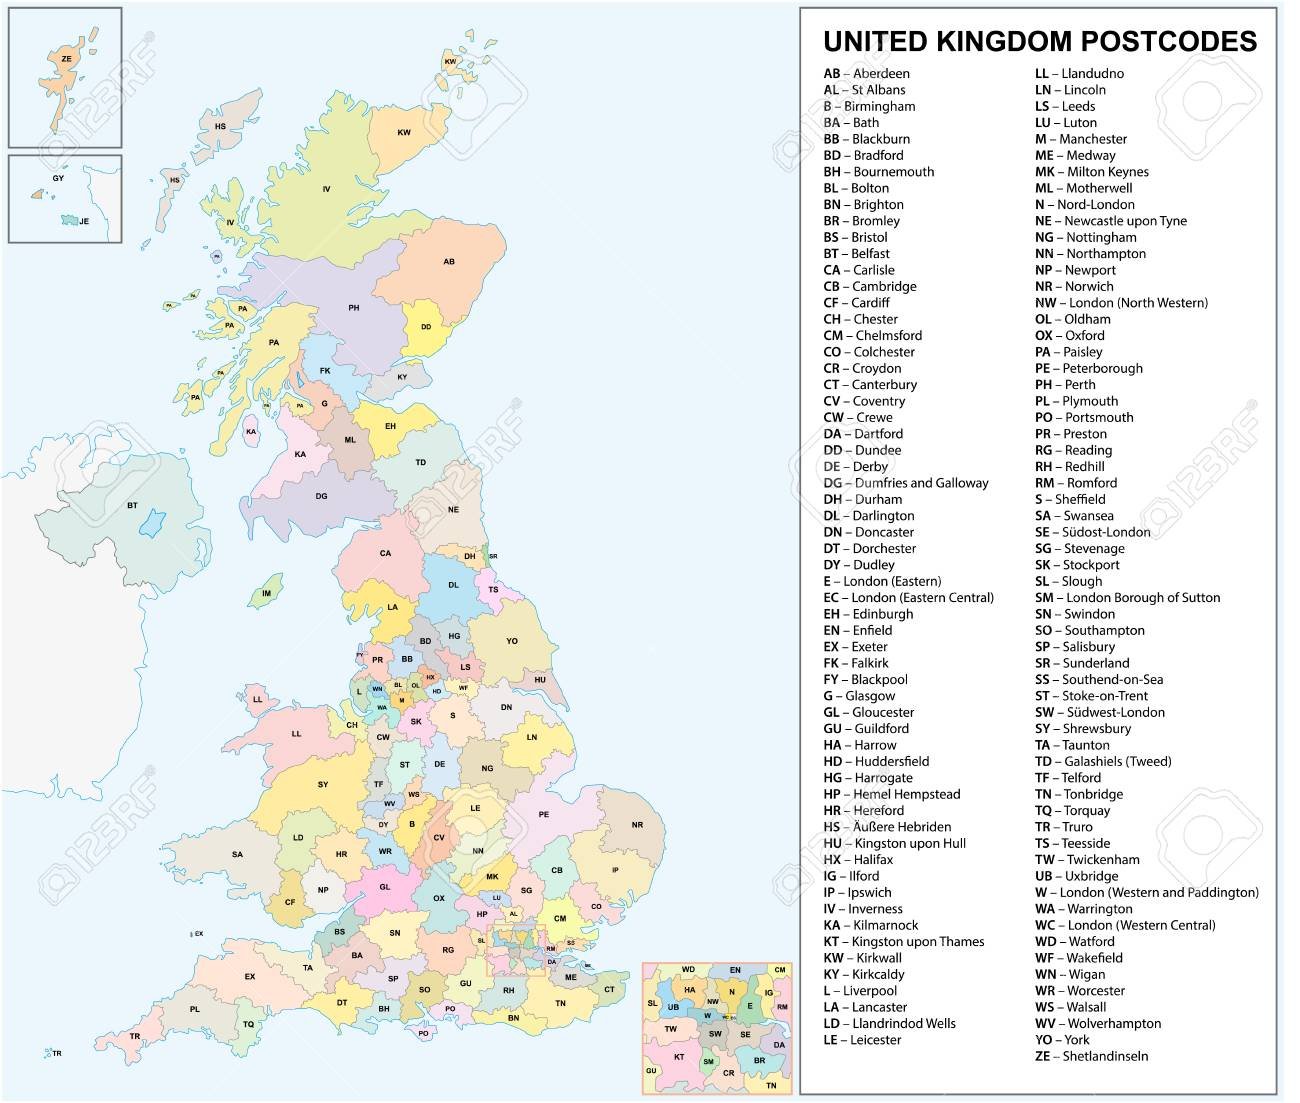 Postcodes in the United Kingdom